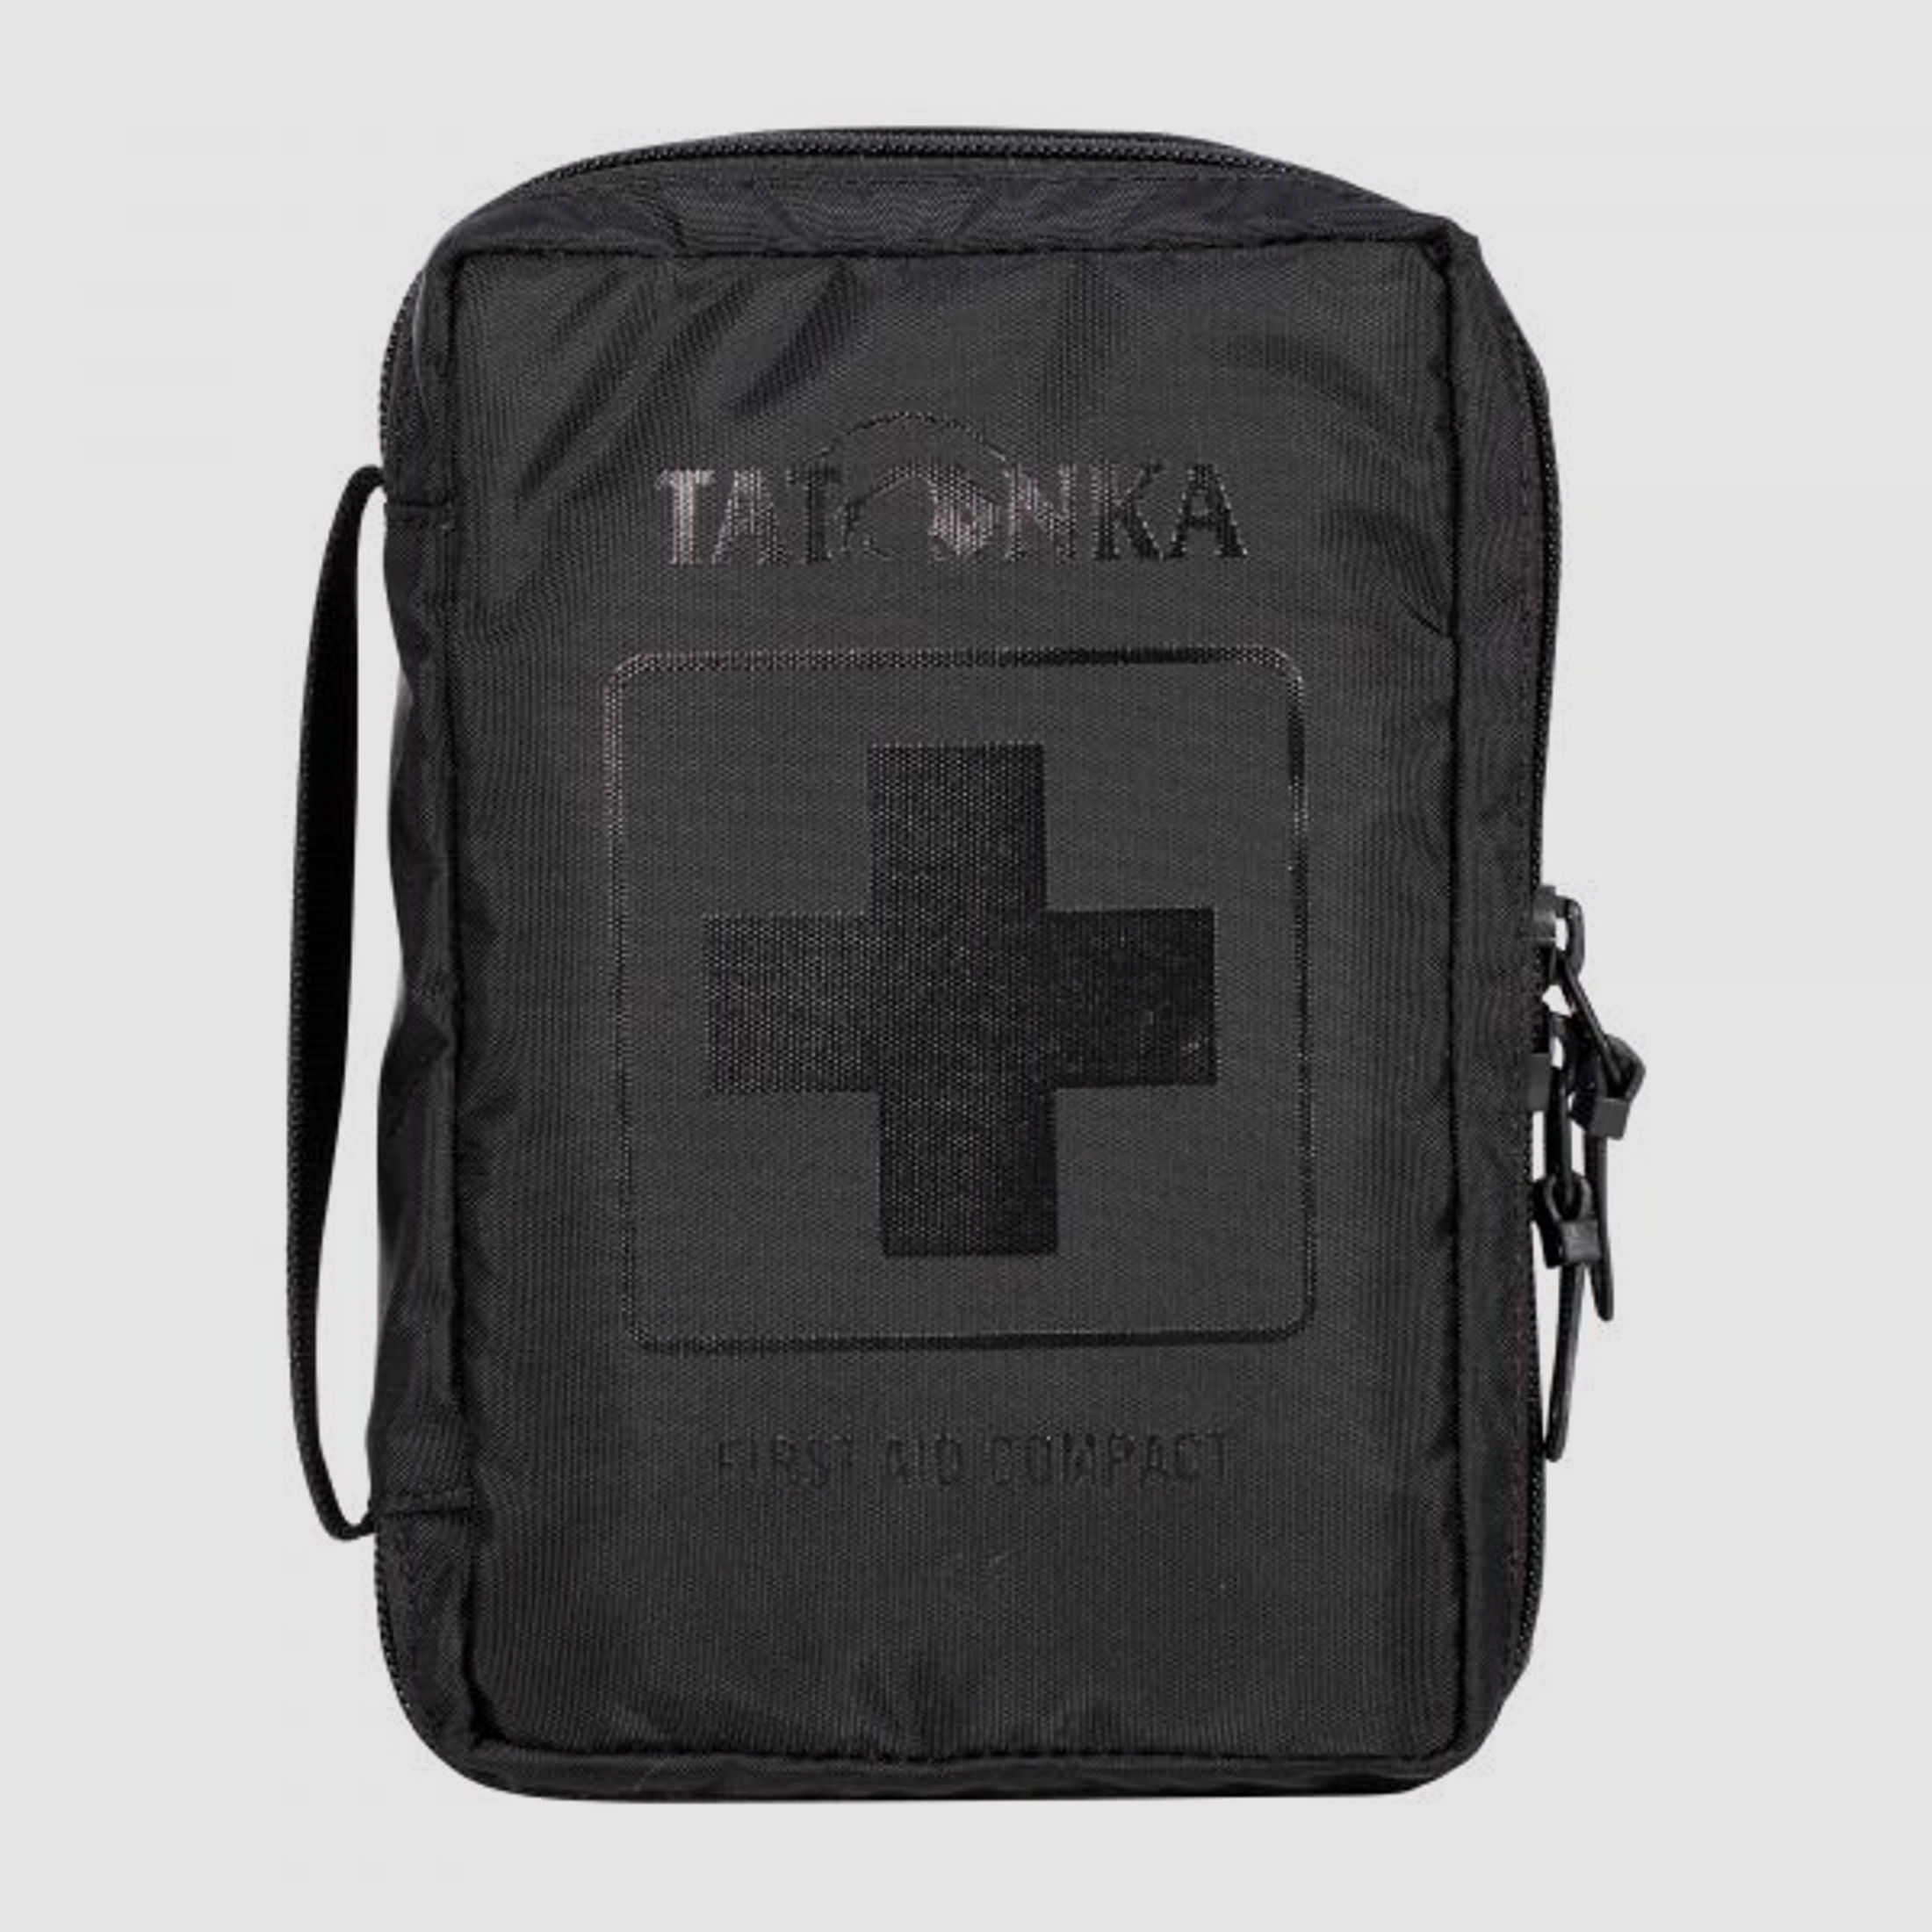 Tatonka Tatonka First Aid Kit Compact schwarz